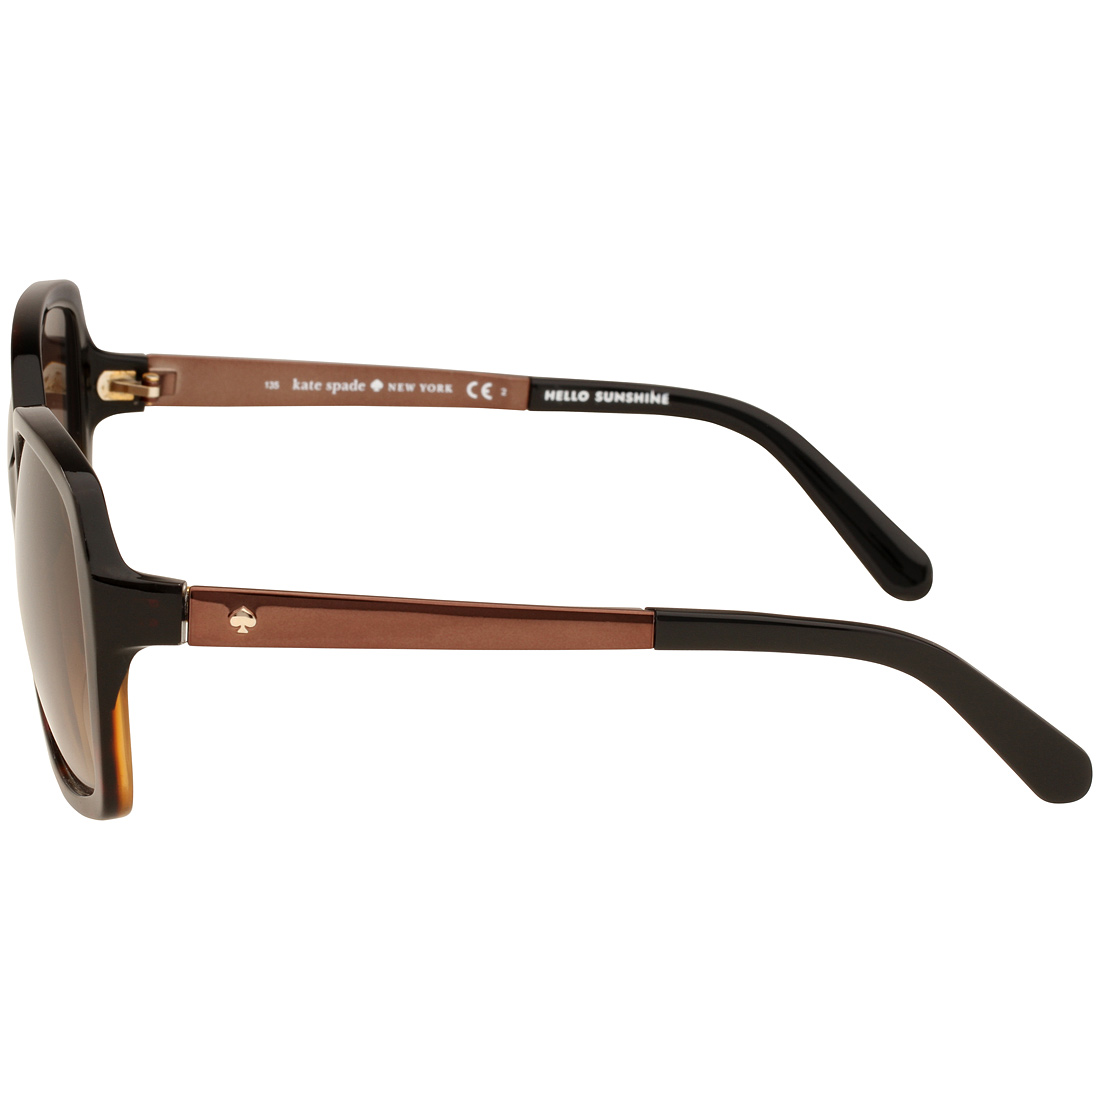 Kate Spade Plastic Frame Brown Lens Ladies Sunglasses DARILYNNSEUT5816135 - image 3 of 3